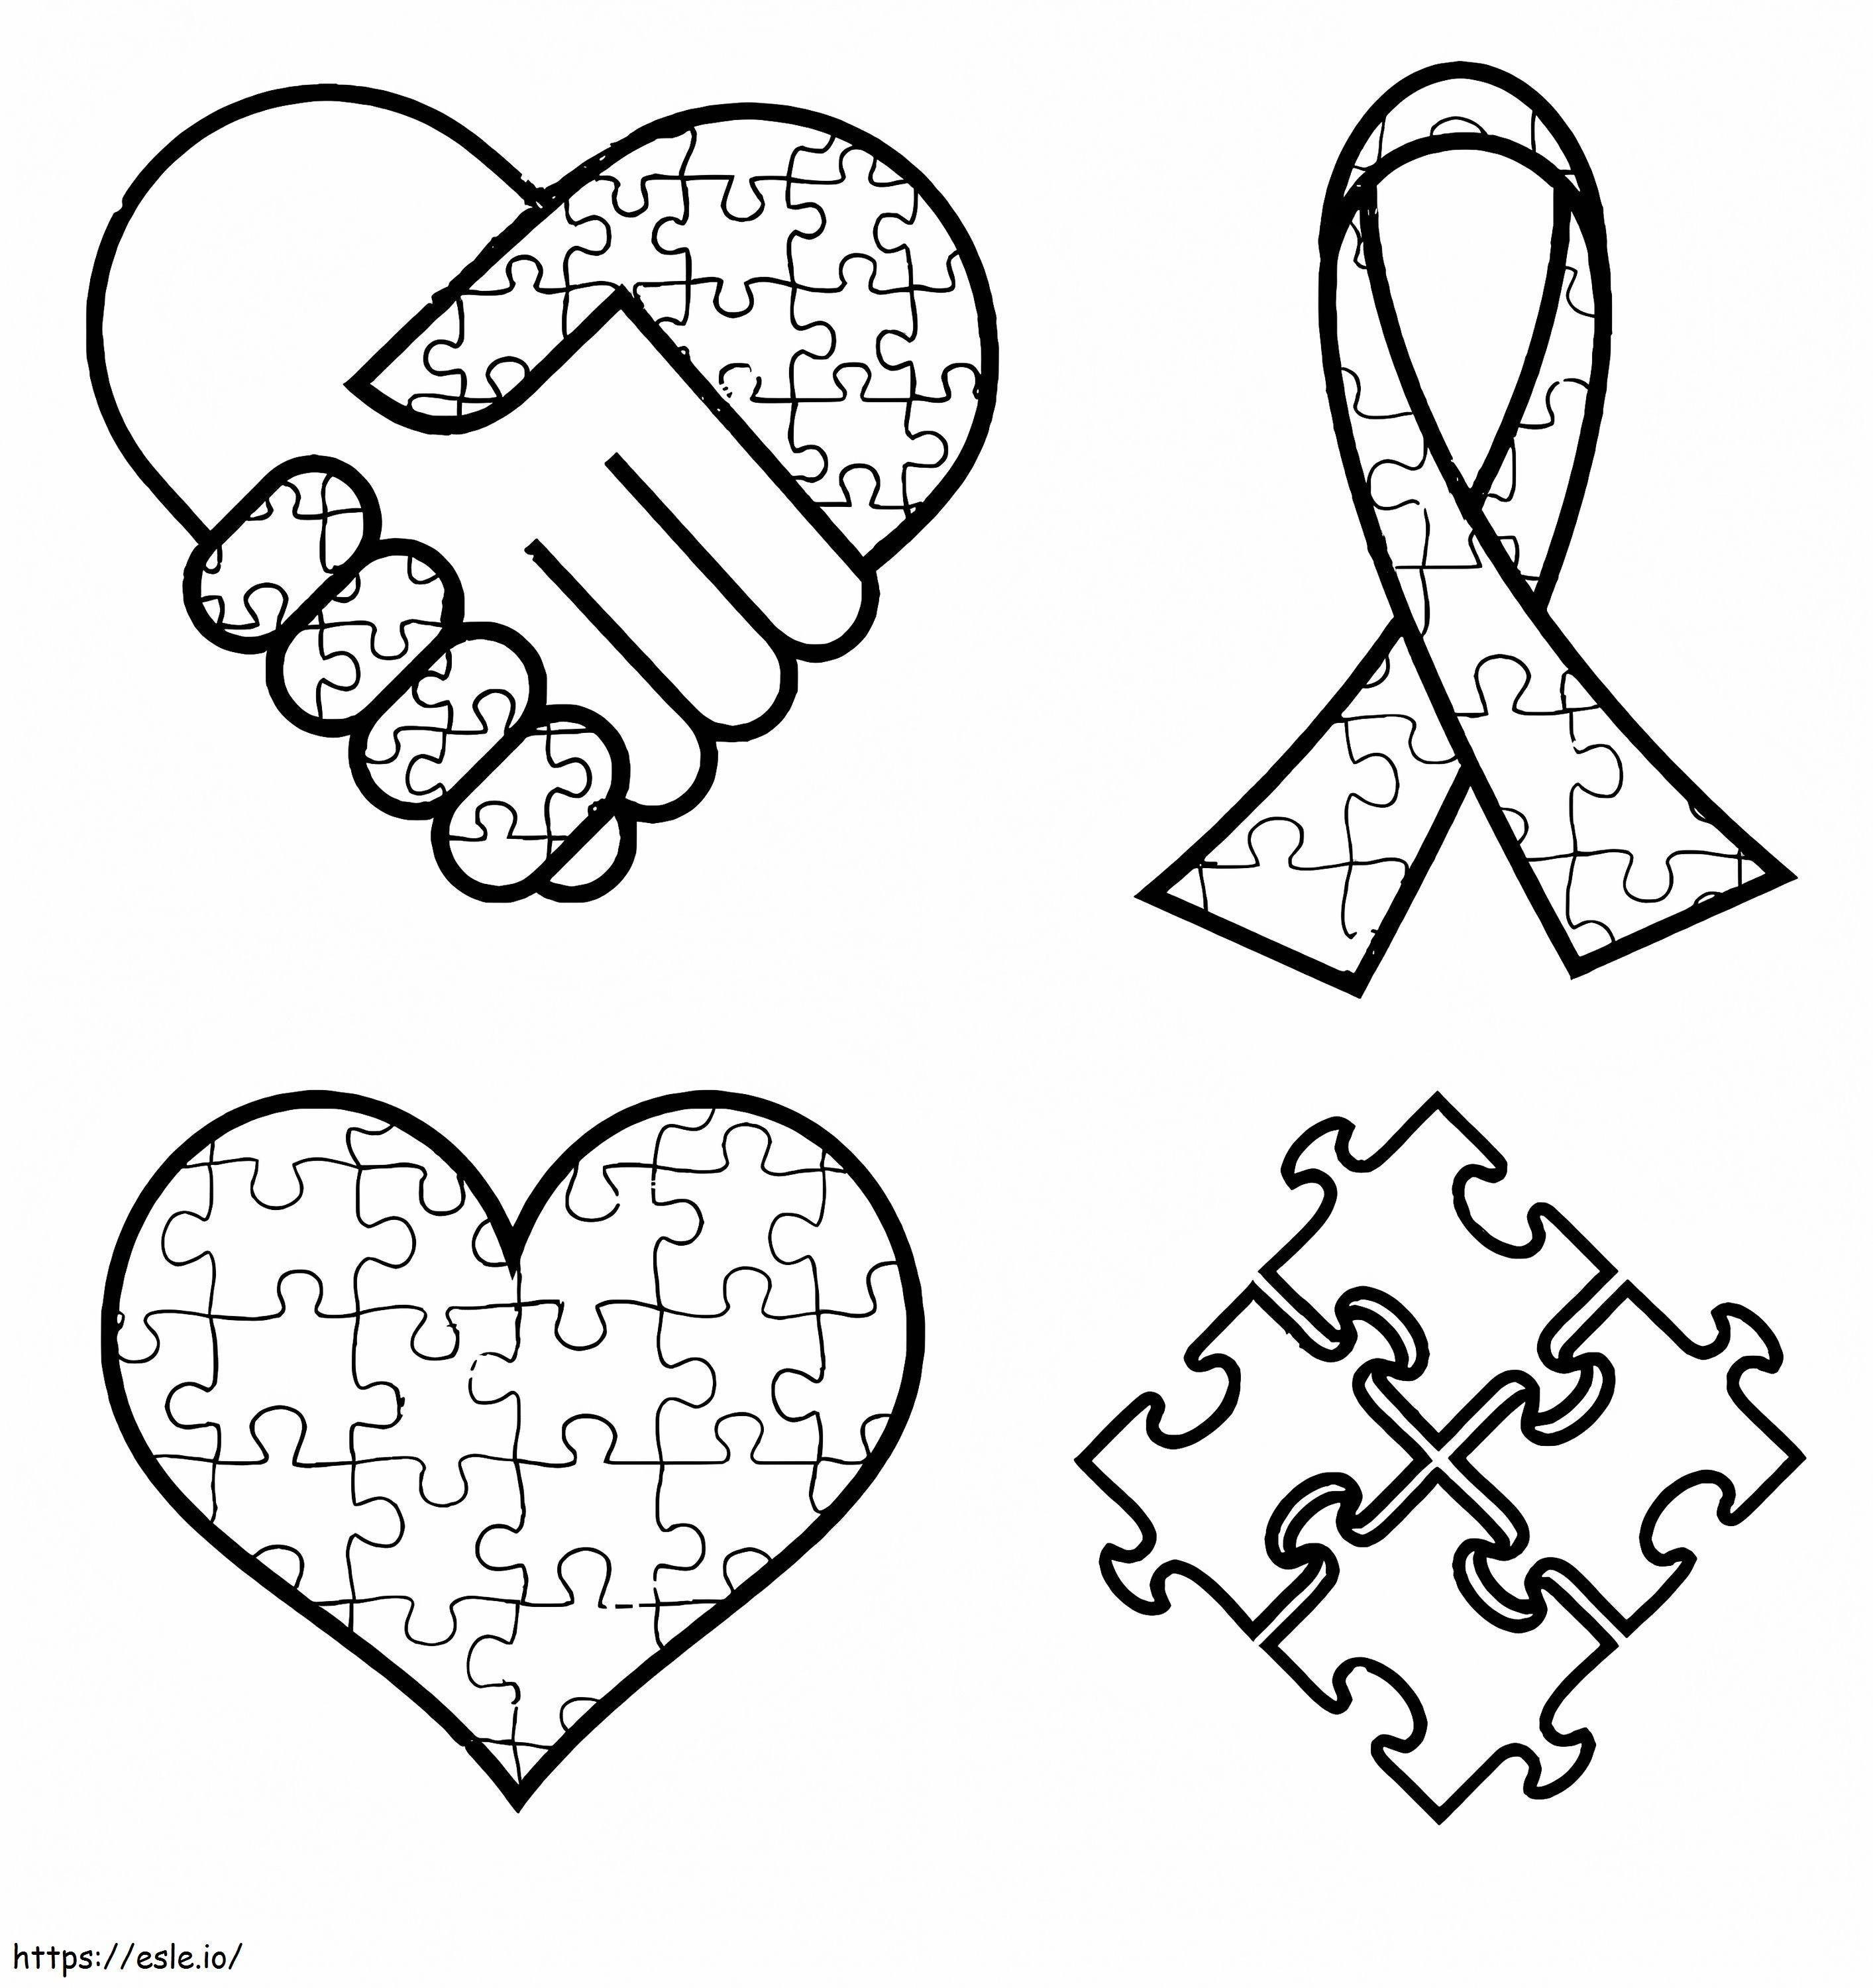 Autism Awareness Symbols coloring page